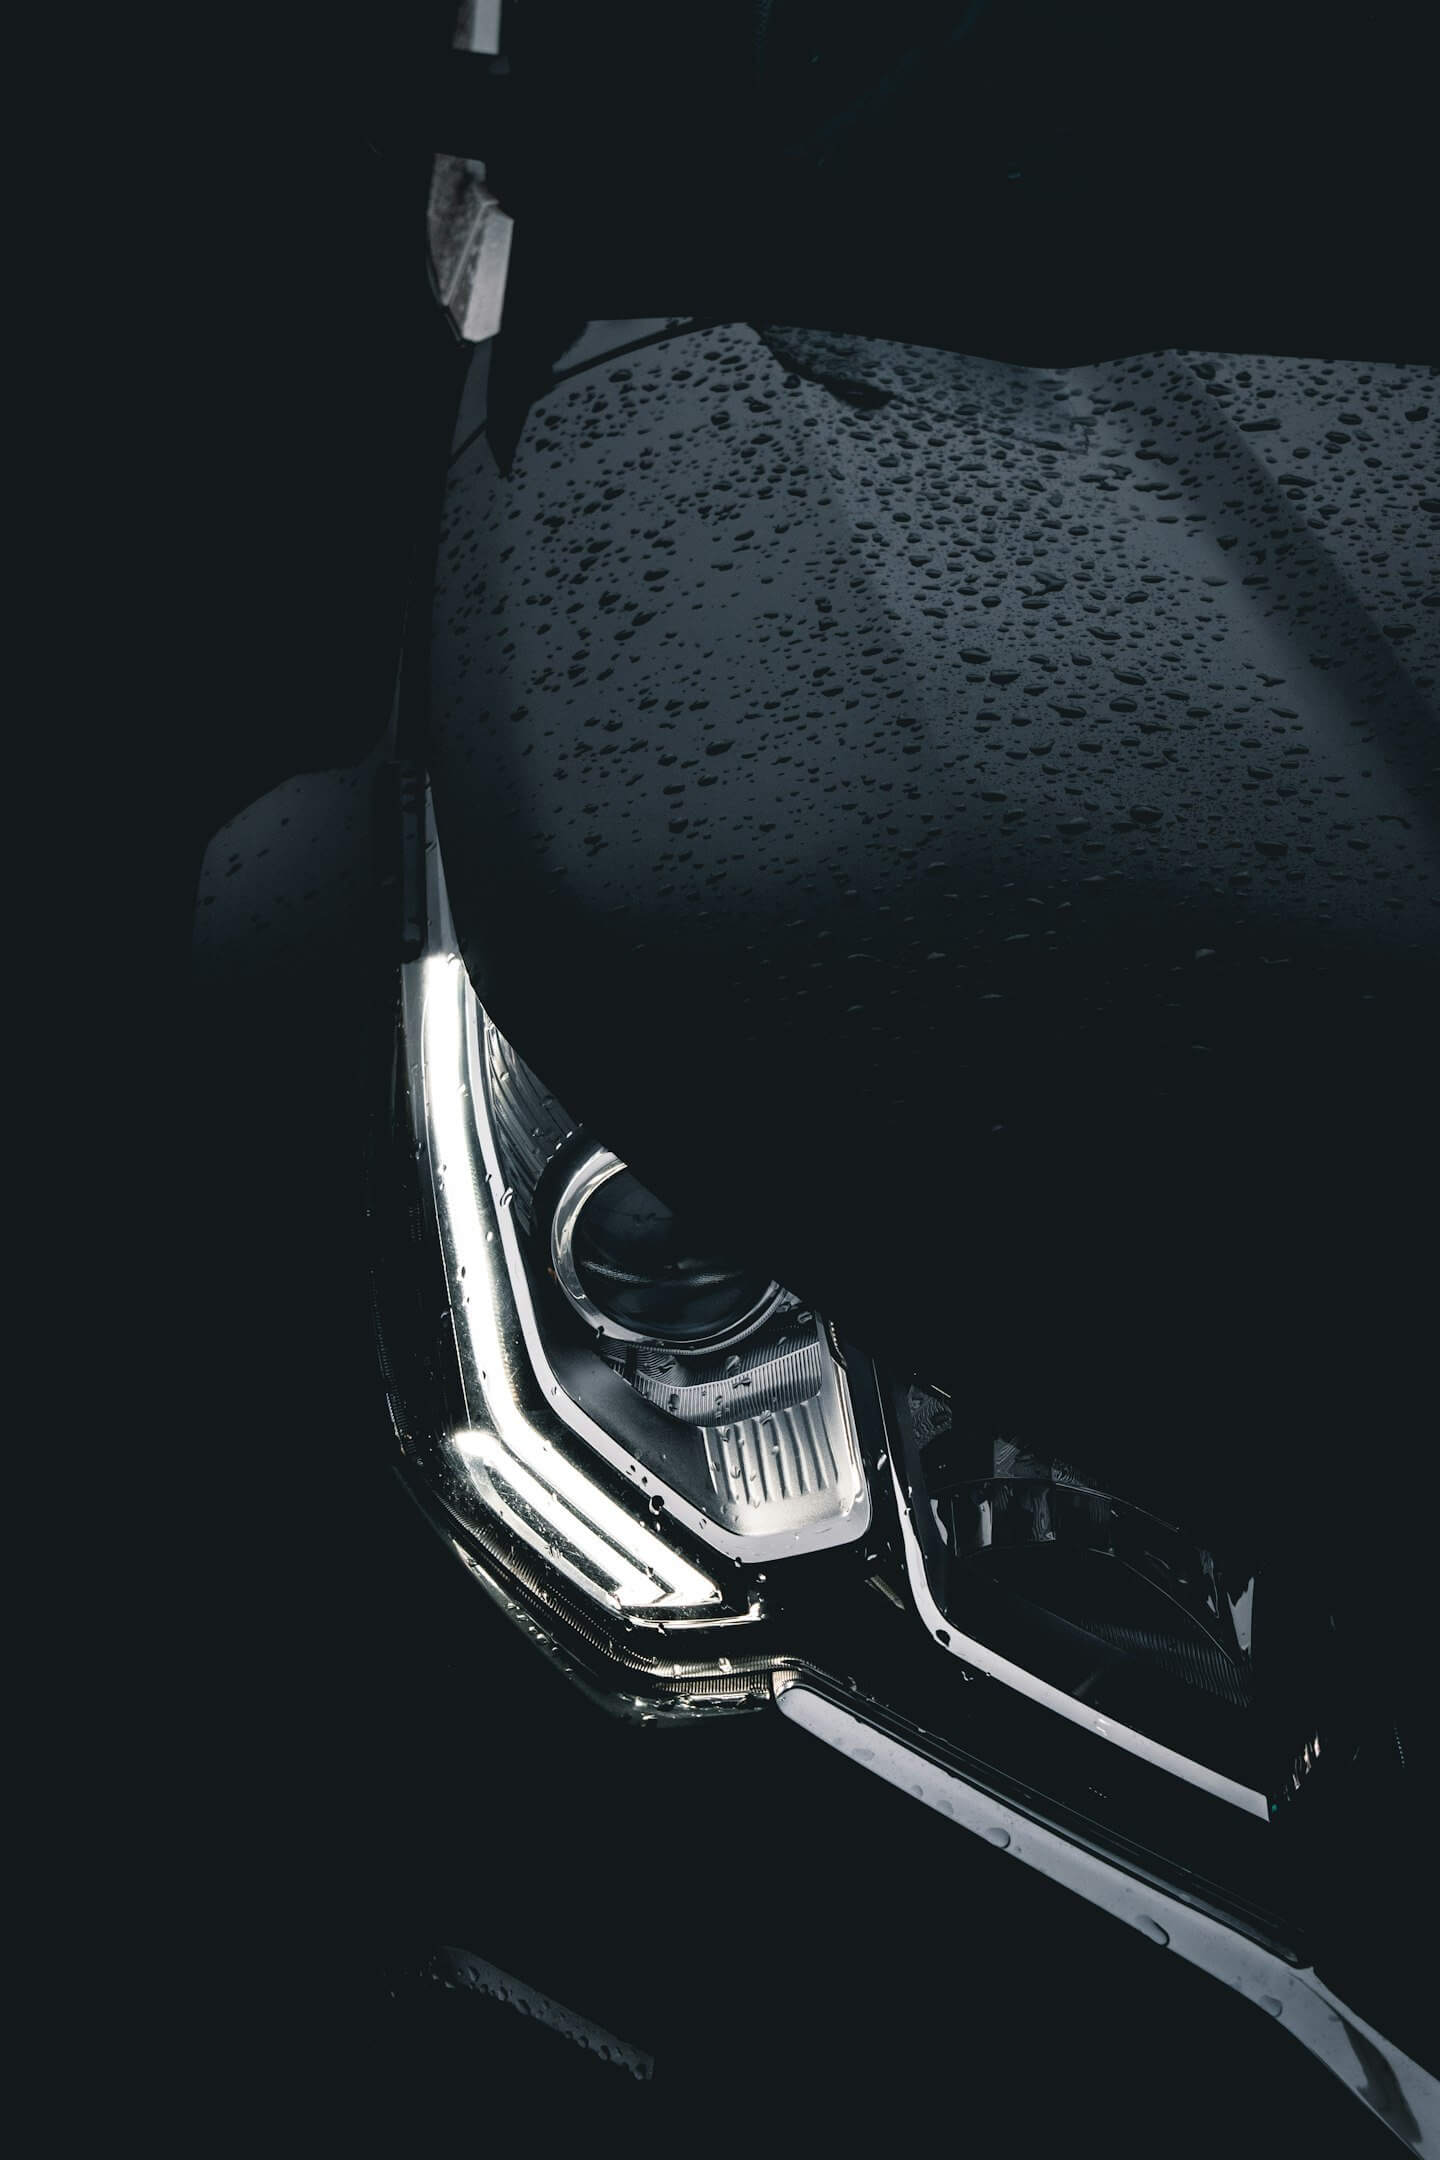 A black cars headlights